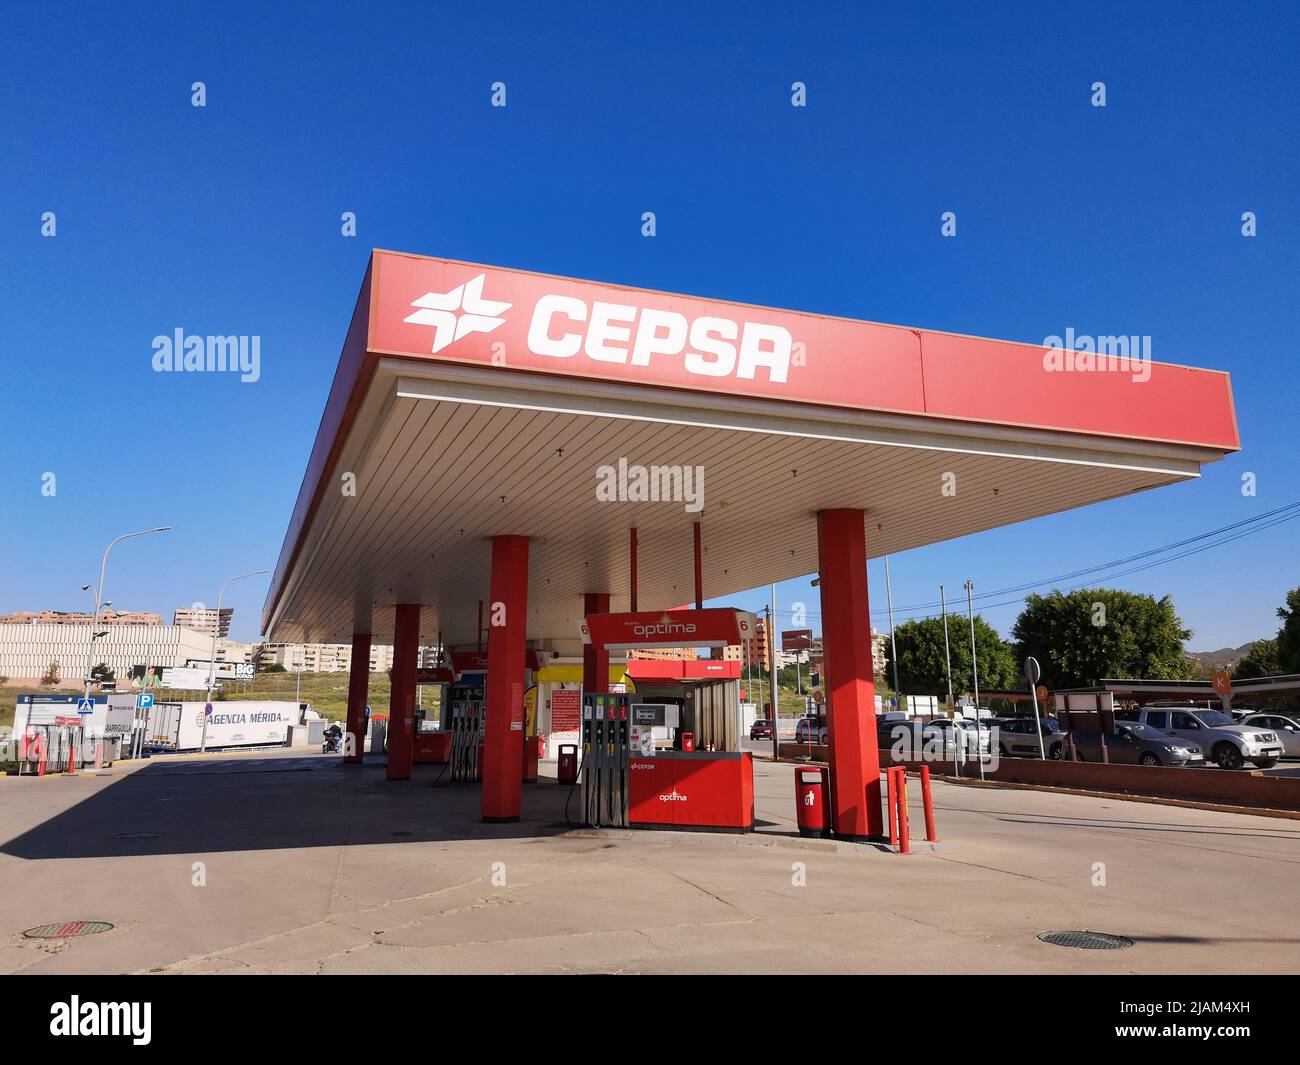 Cepsa gas station in Malaga, Spain. Stock Photo